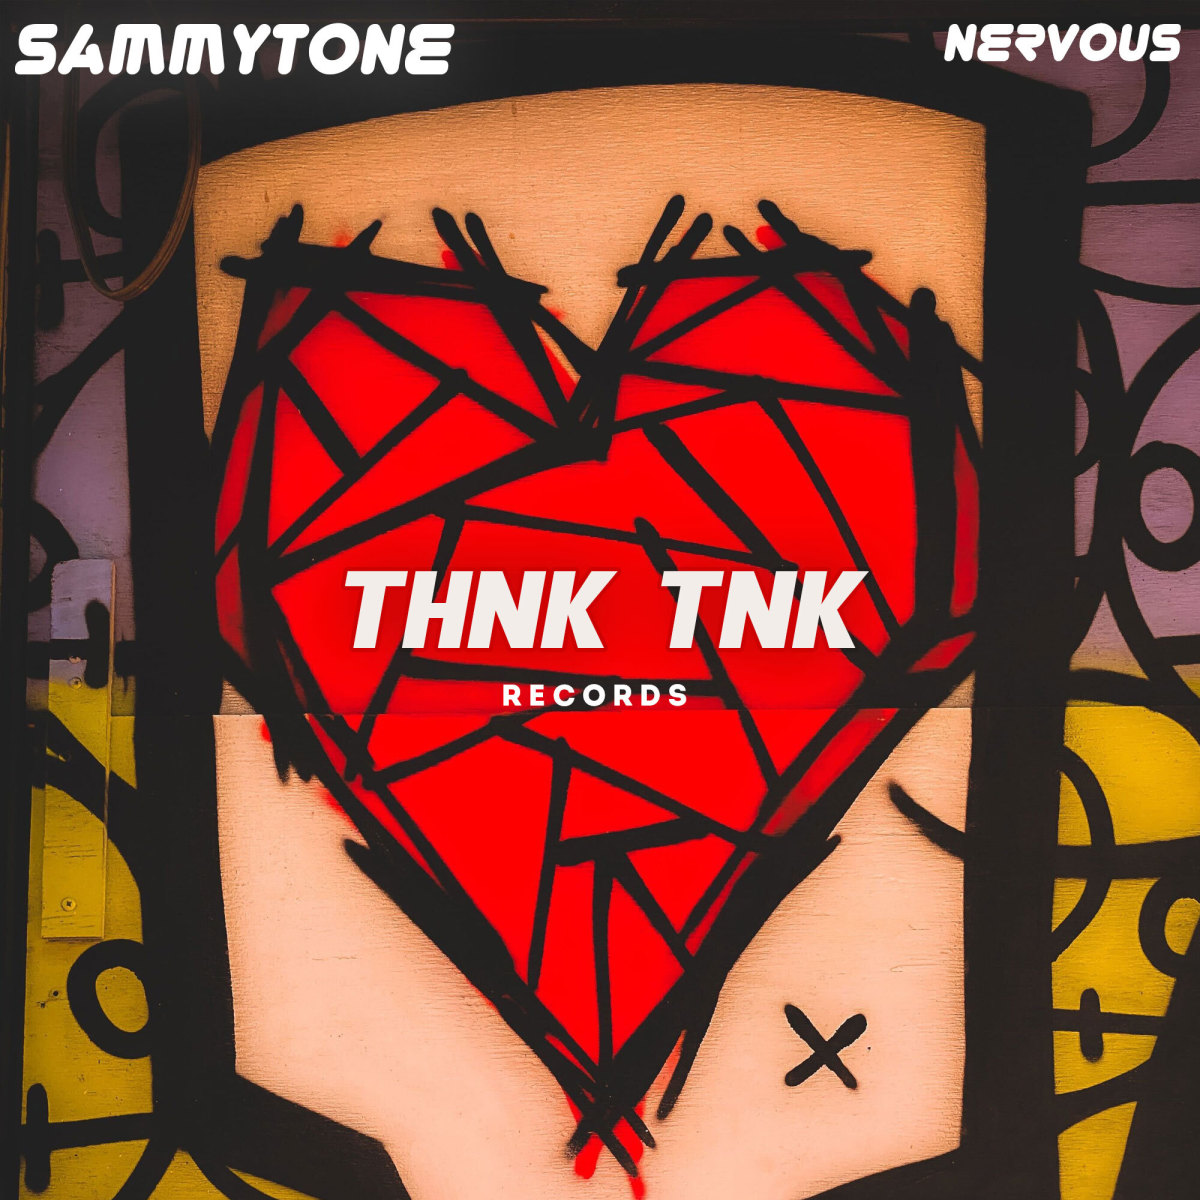 PREMIERE: Sammytone - Nervous [THNK TNK Records]